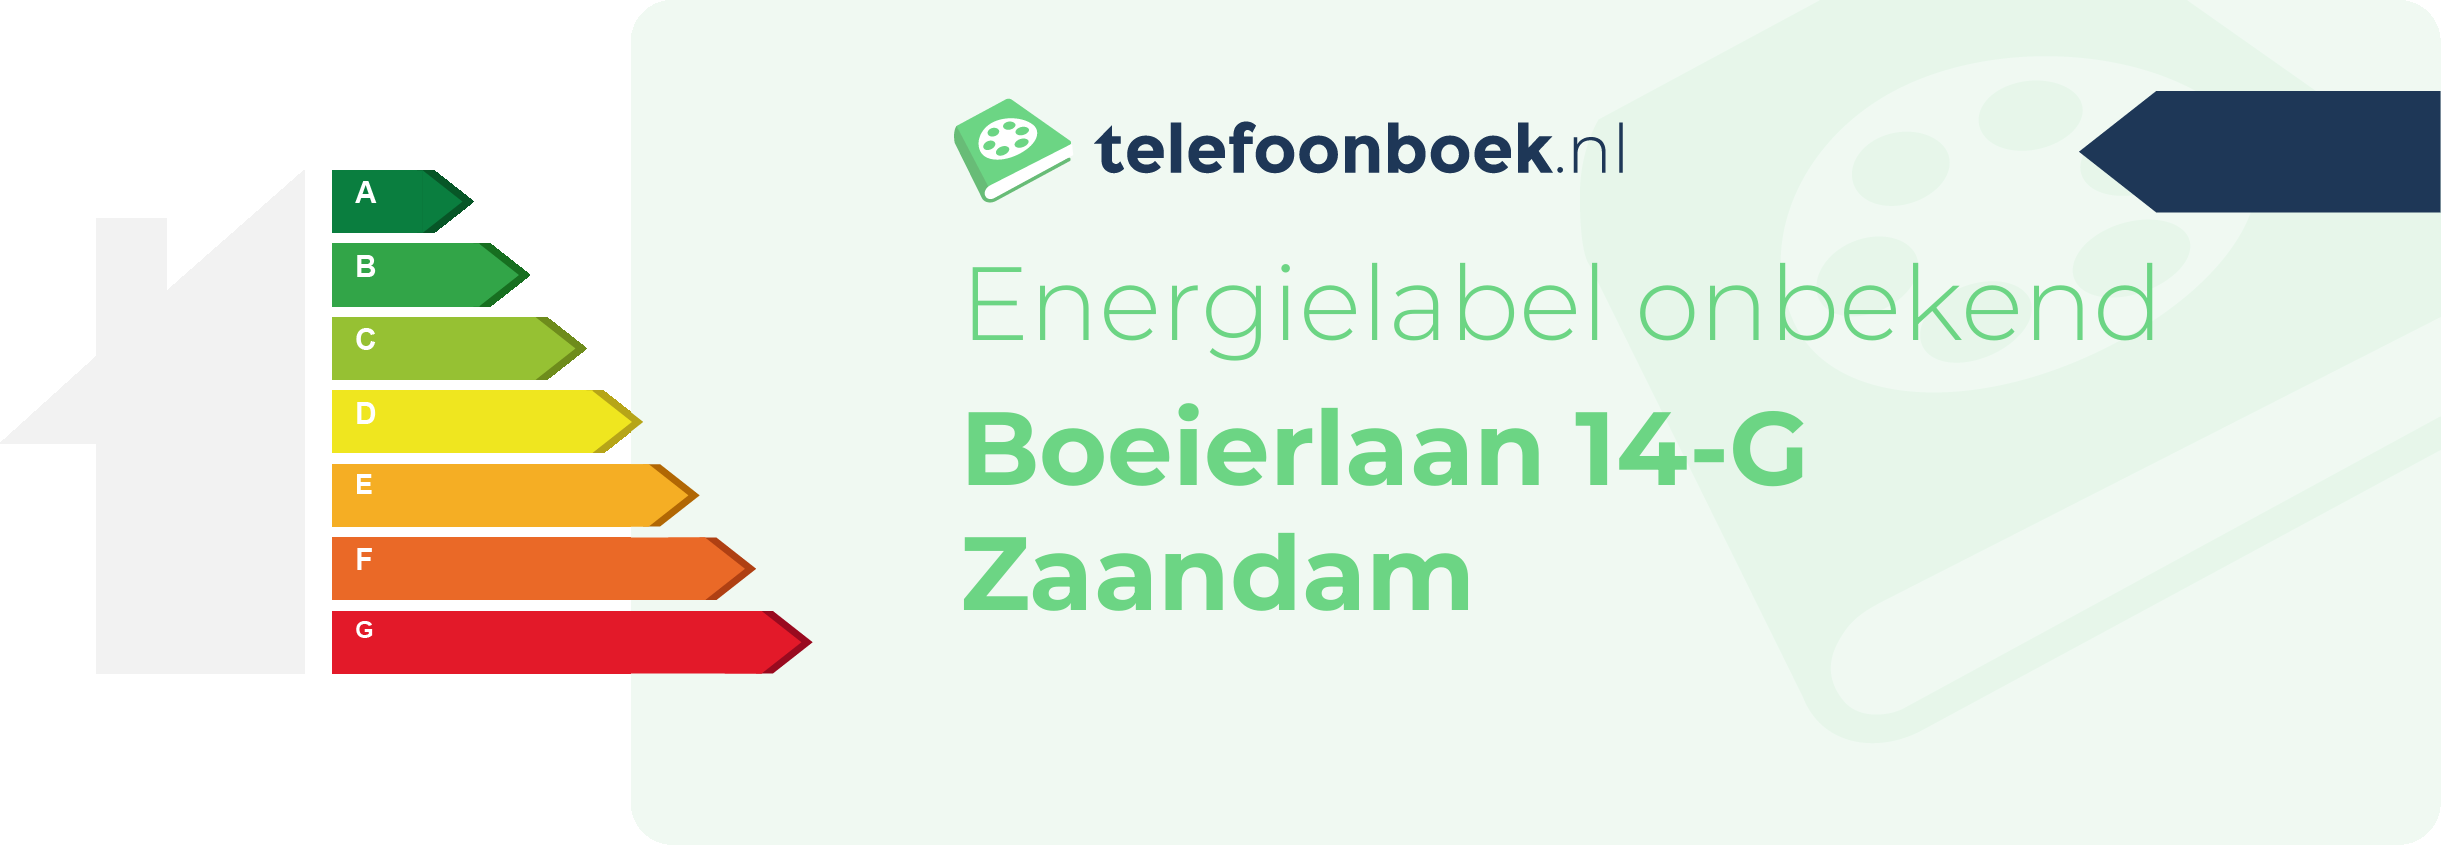 Energielabel Boeierlaan 14-G Zaandam